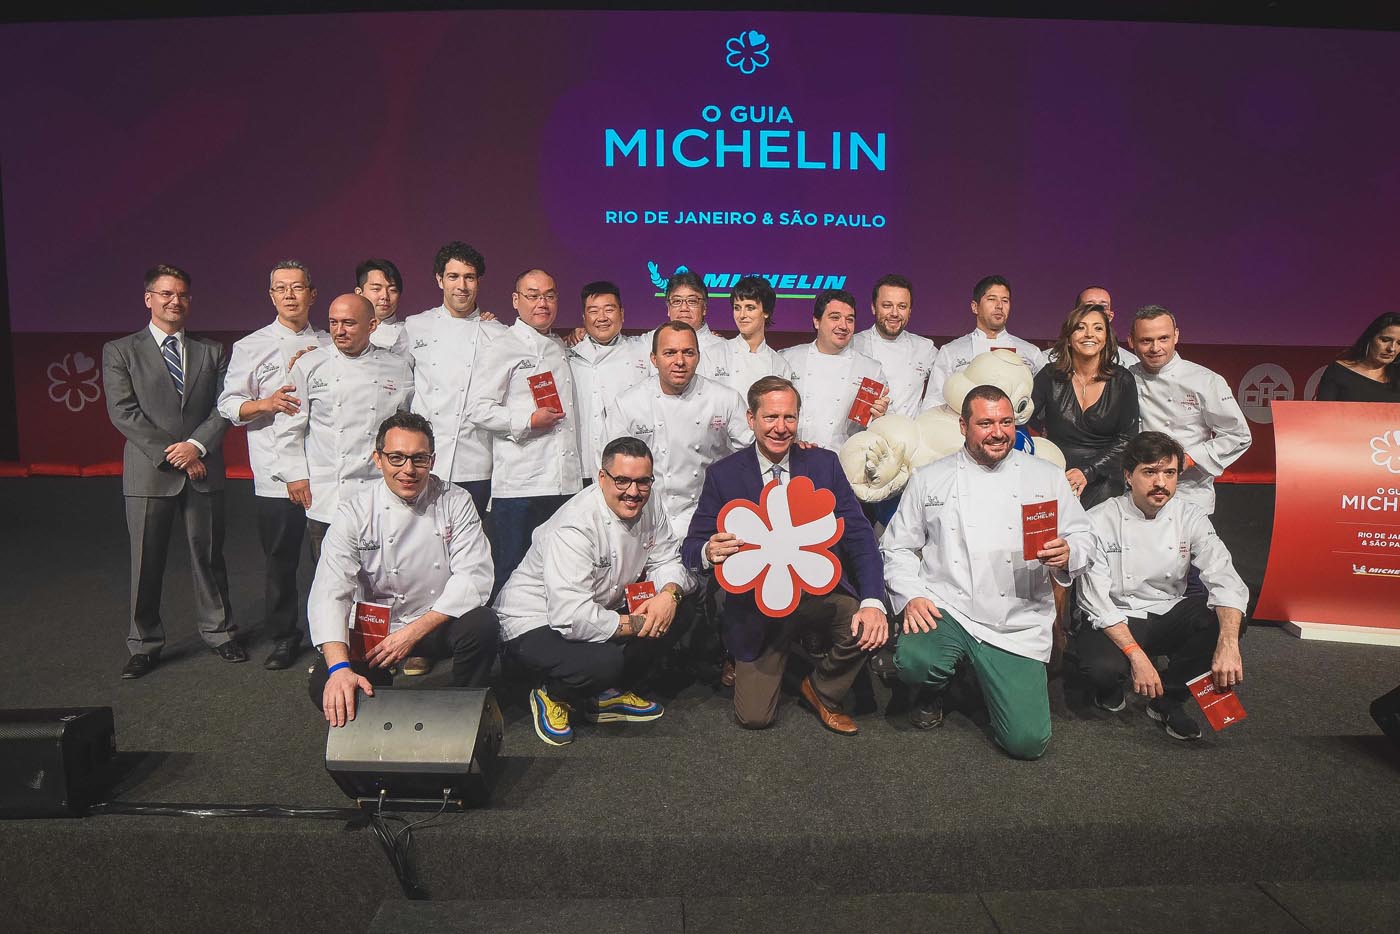 1 estrela - Restaurantes premiados no Guia Michelin